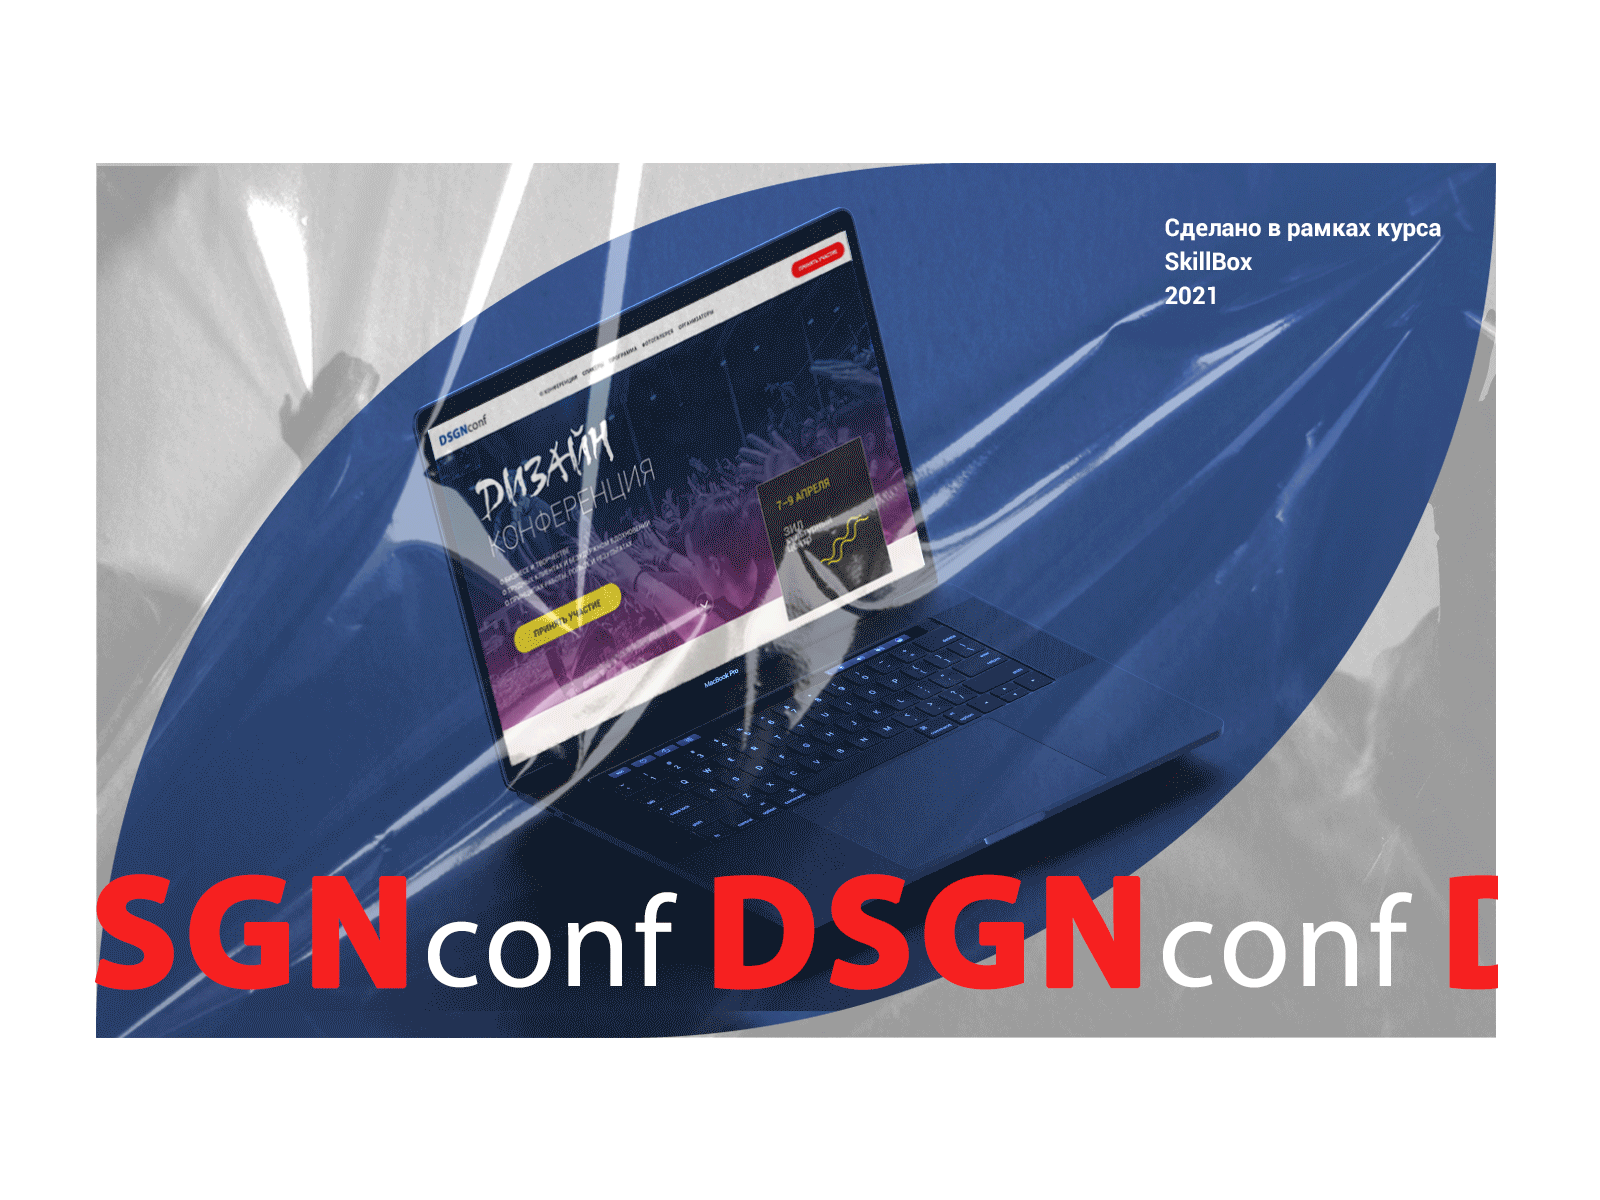 Website concept about conference design. 2021